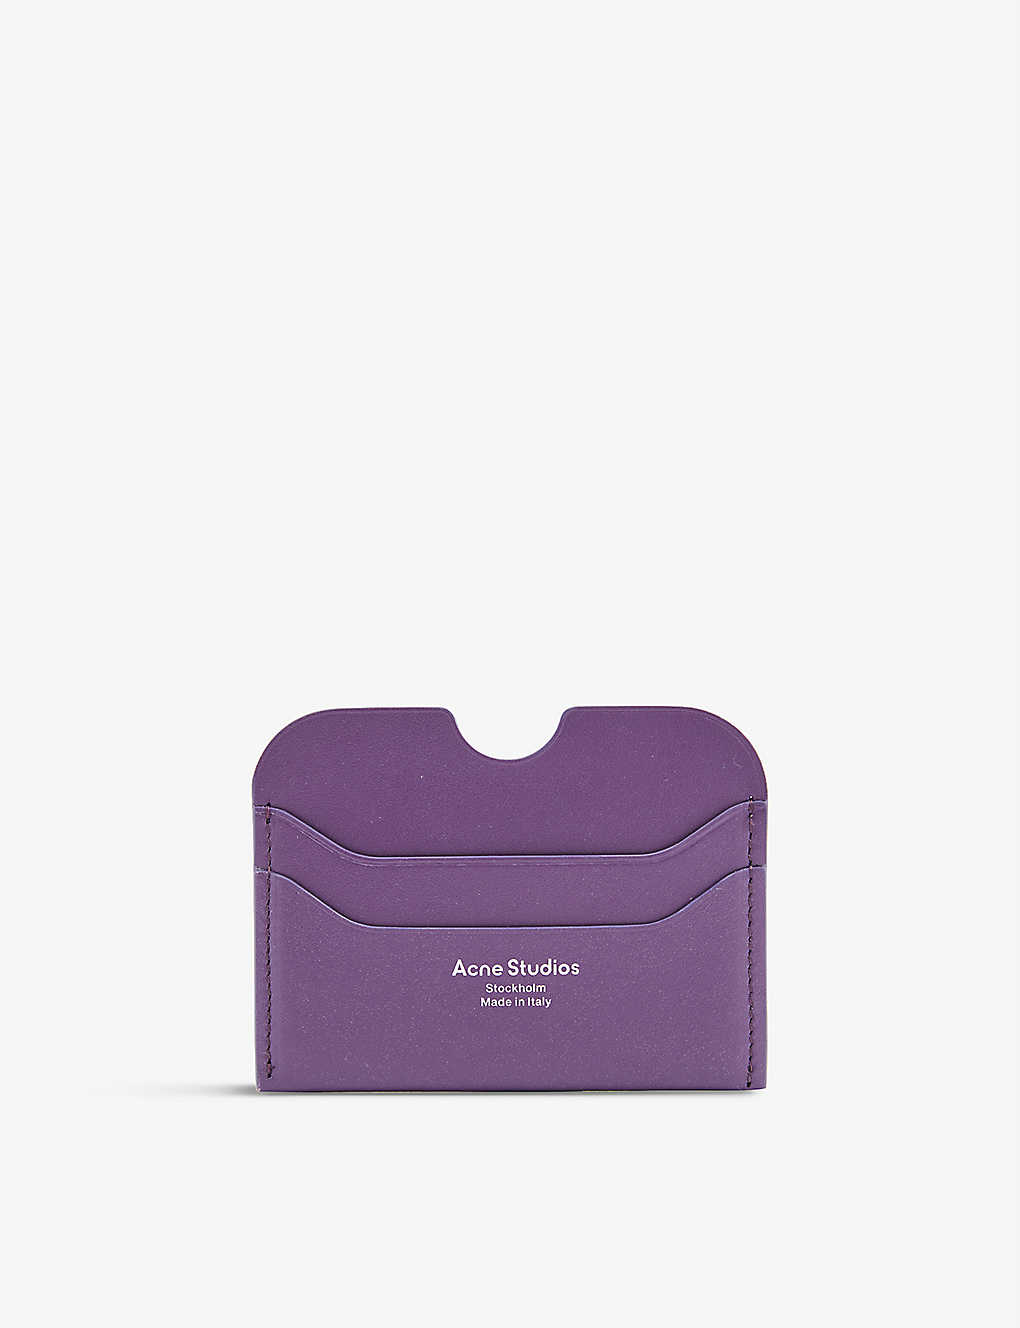 Acne Studios Elma Large Leather Card Holder In Violet Purple